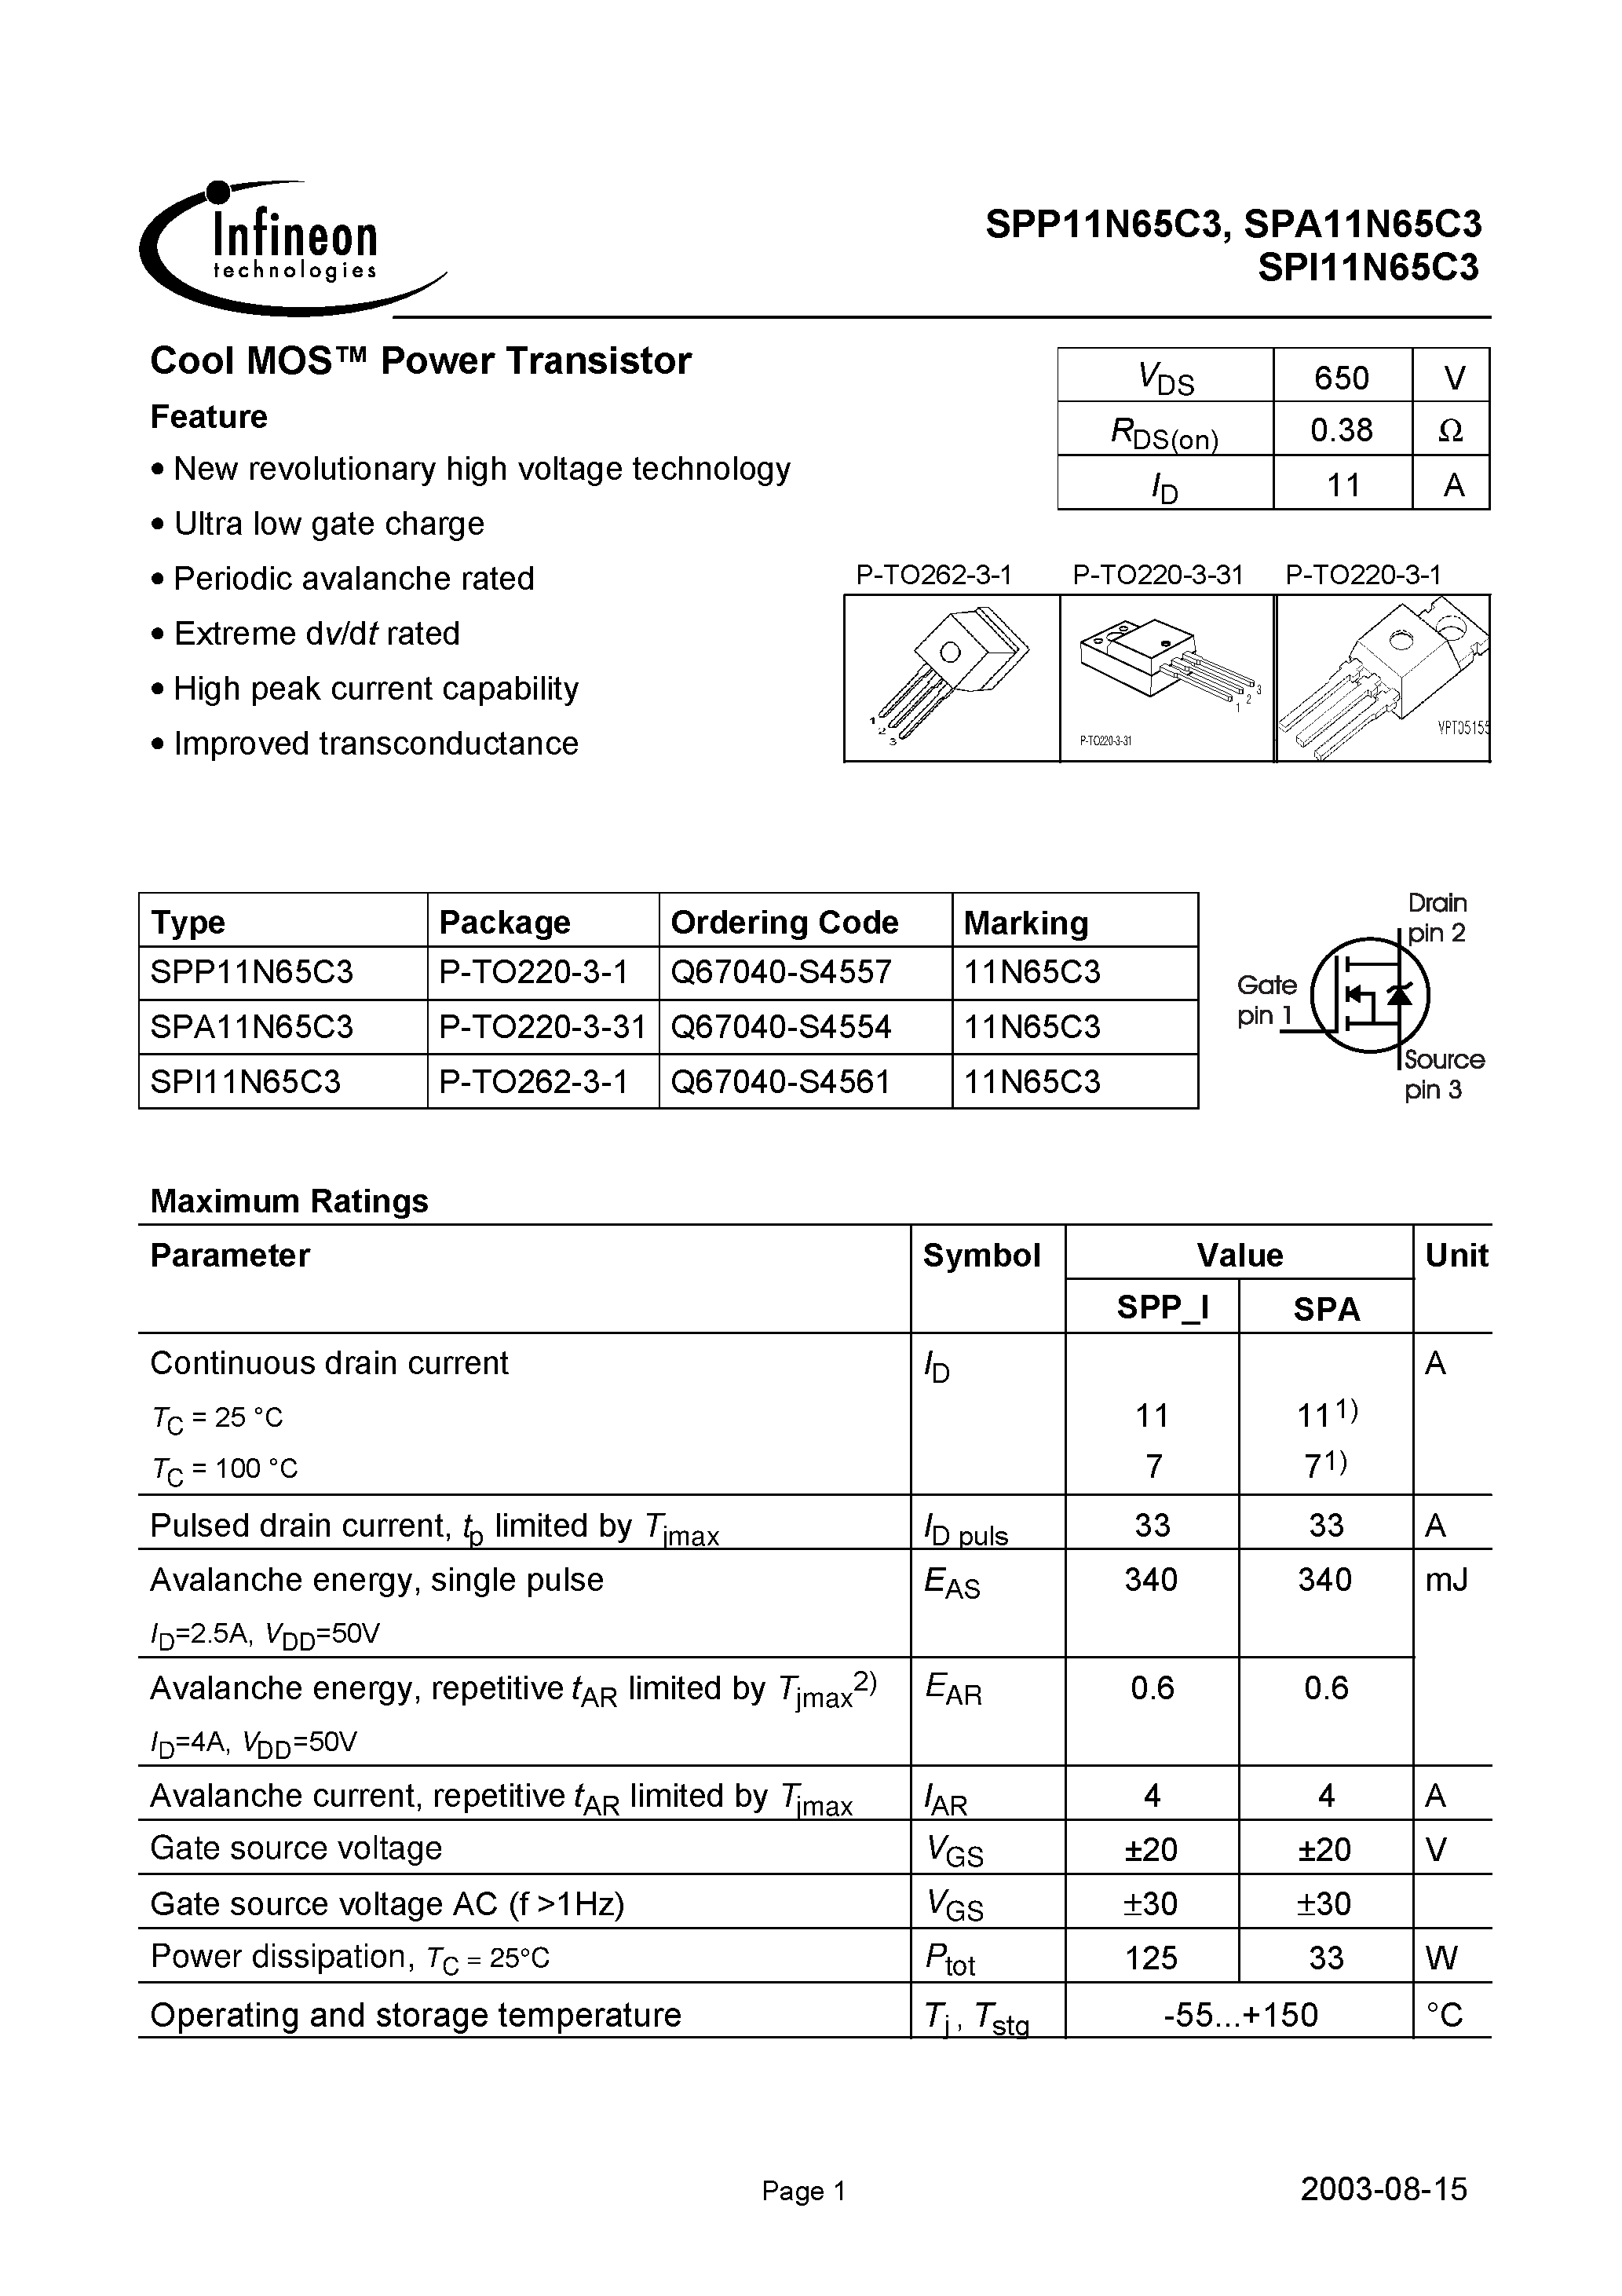 Даташит SPI11N65C3 - Cool MOS Power Transistor страница 1